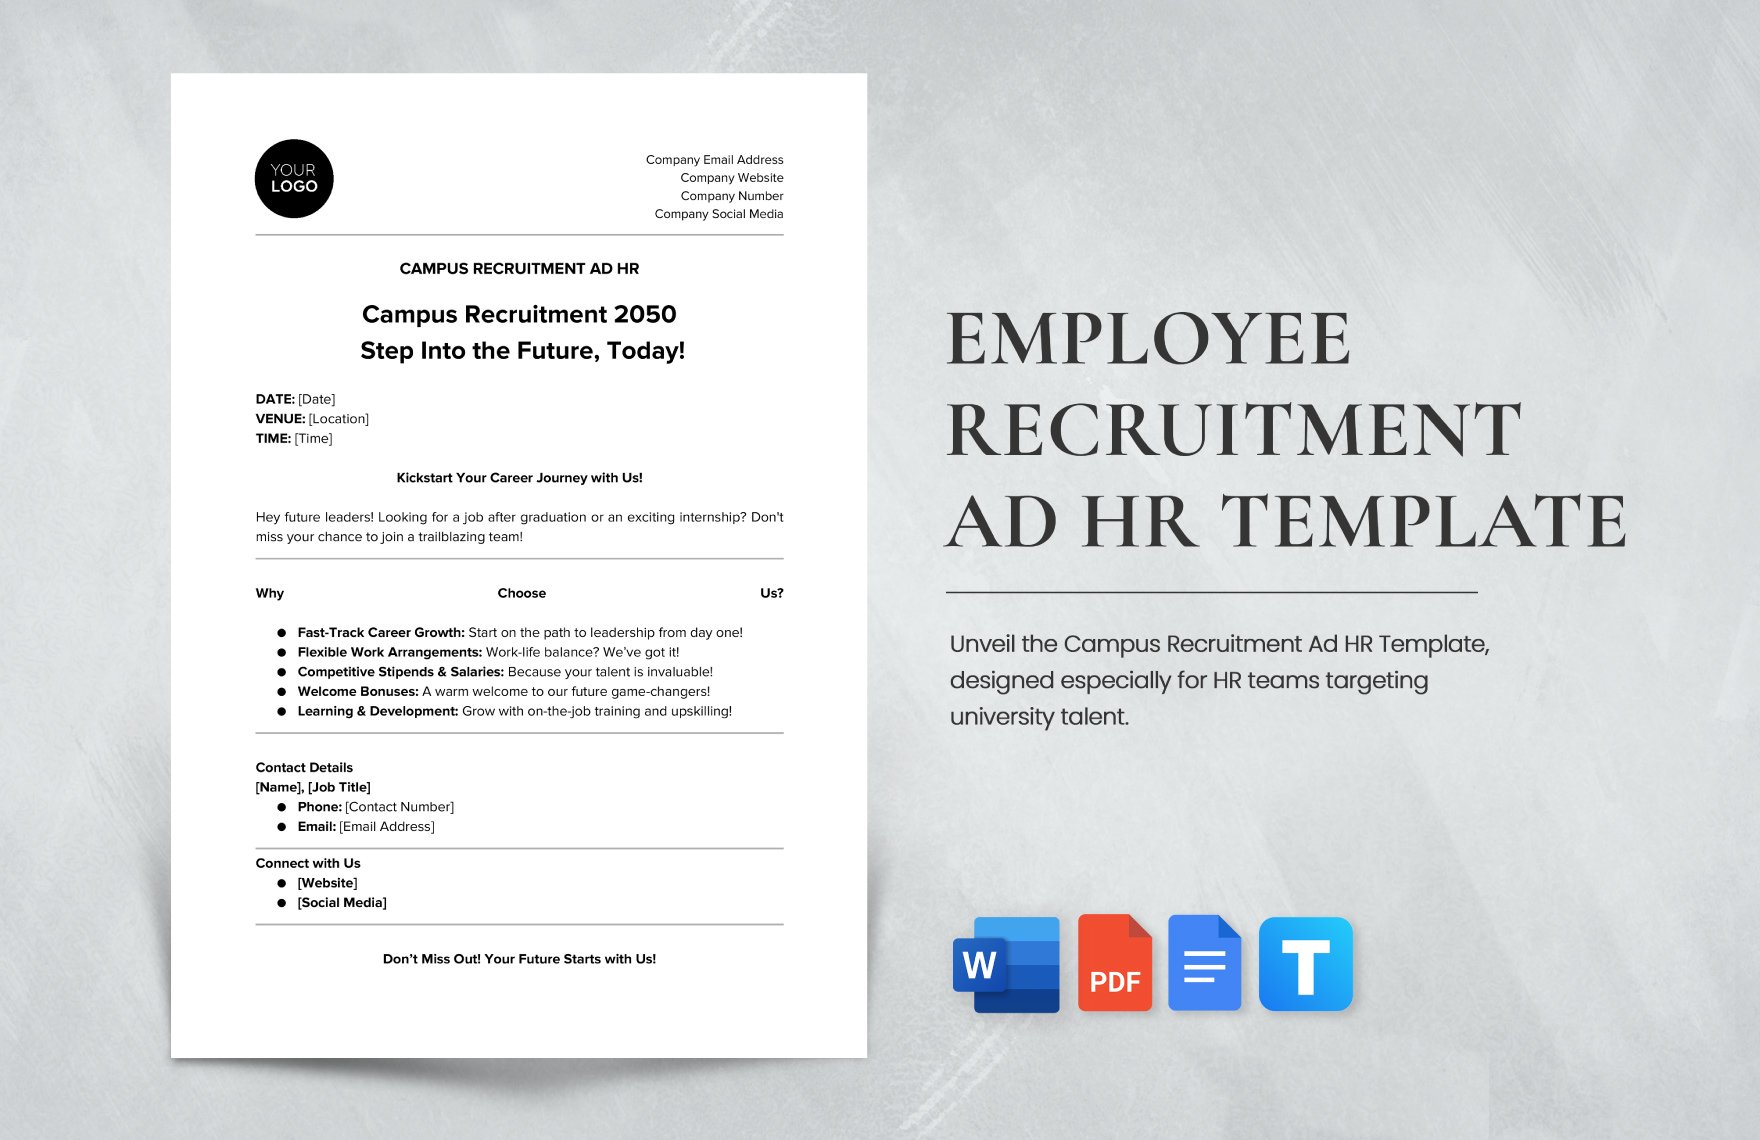 Employee Recruitment Ad HR Template